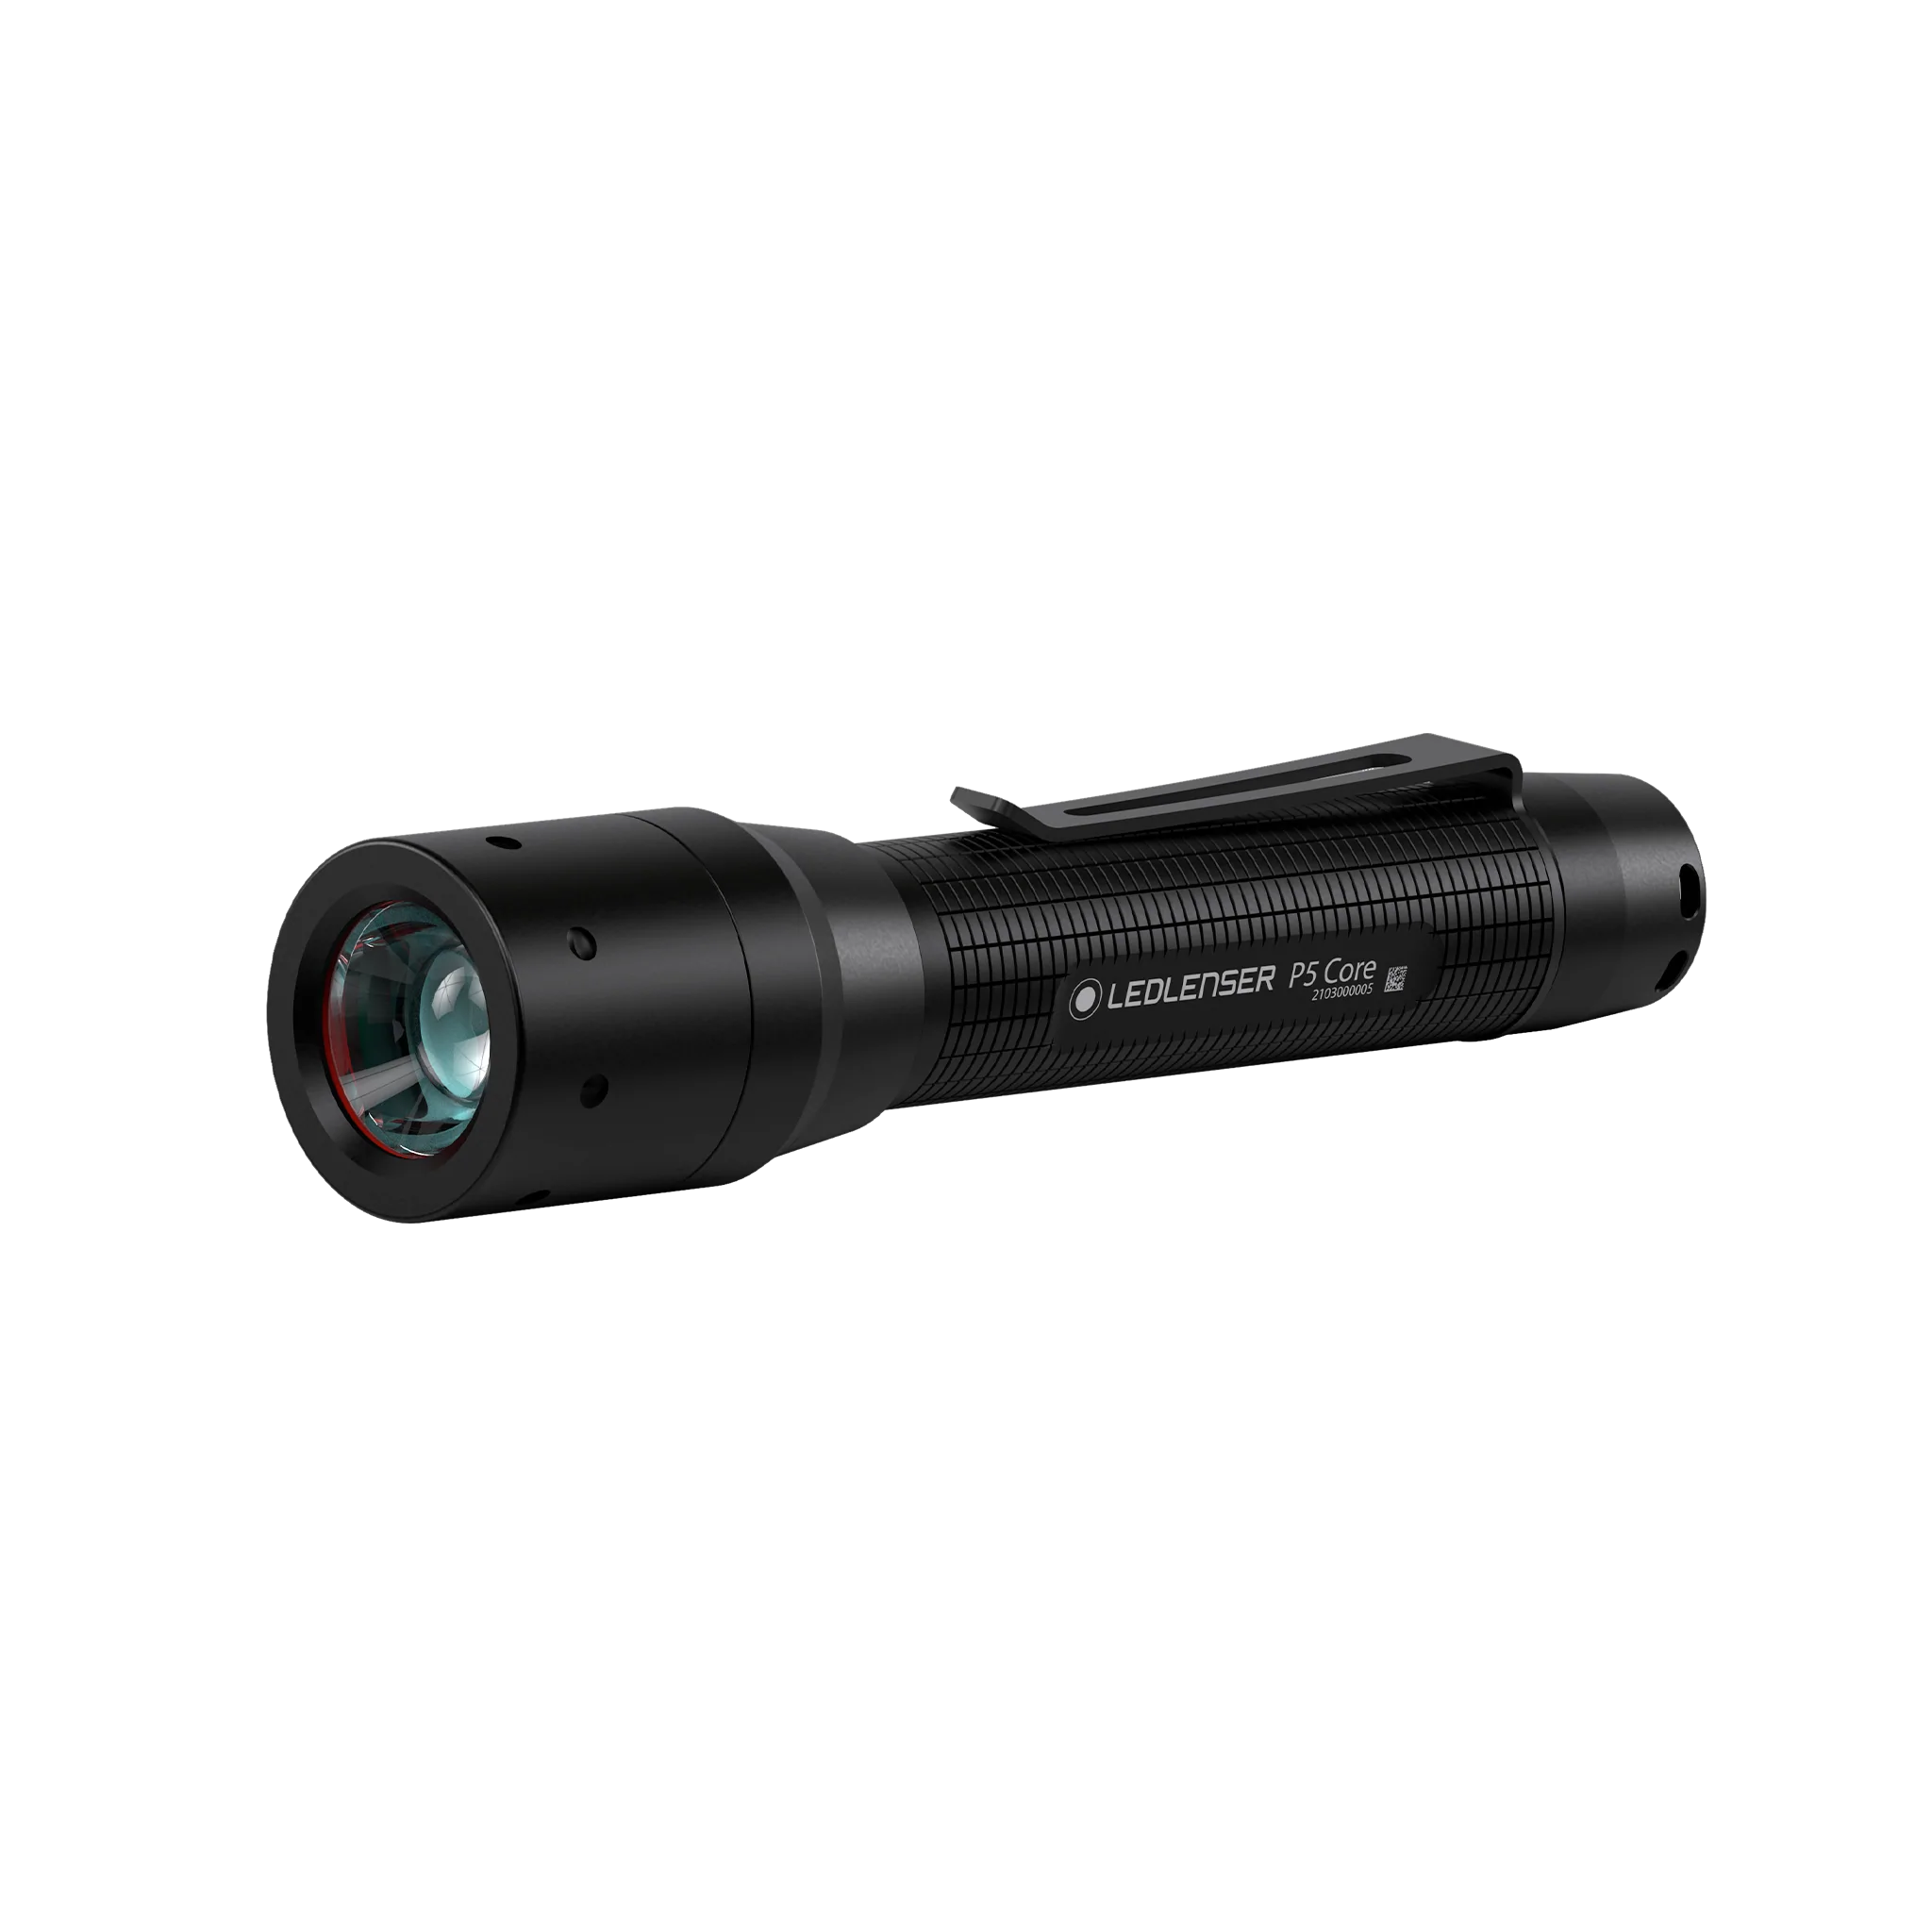 Led Lenser P5 Core Torch - 150 Lumens